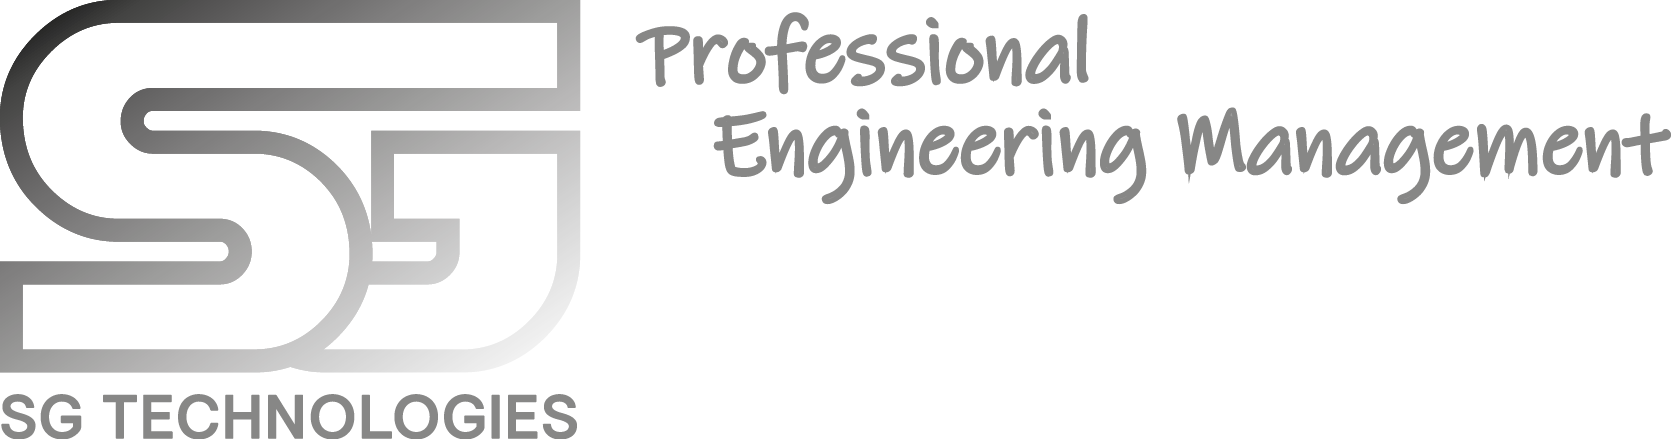 Profesional Engineering Managment SG Technologies